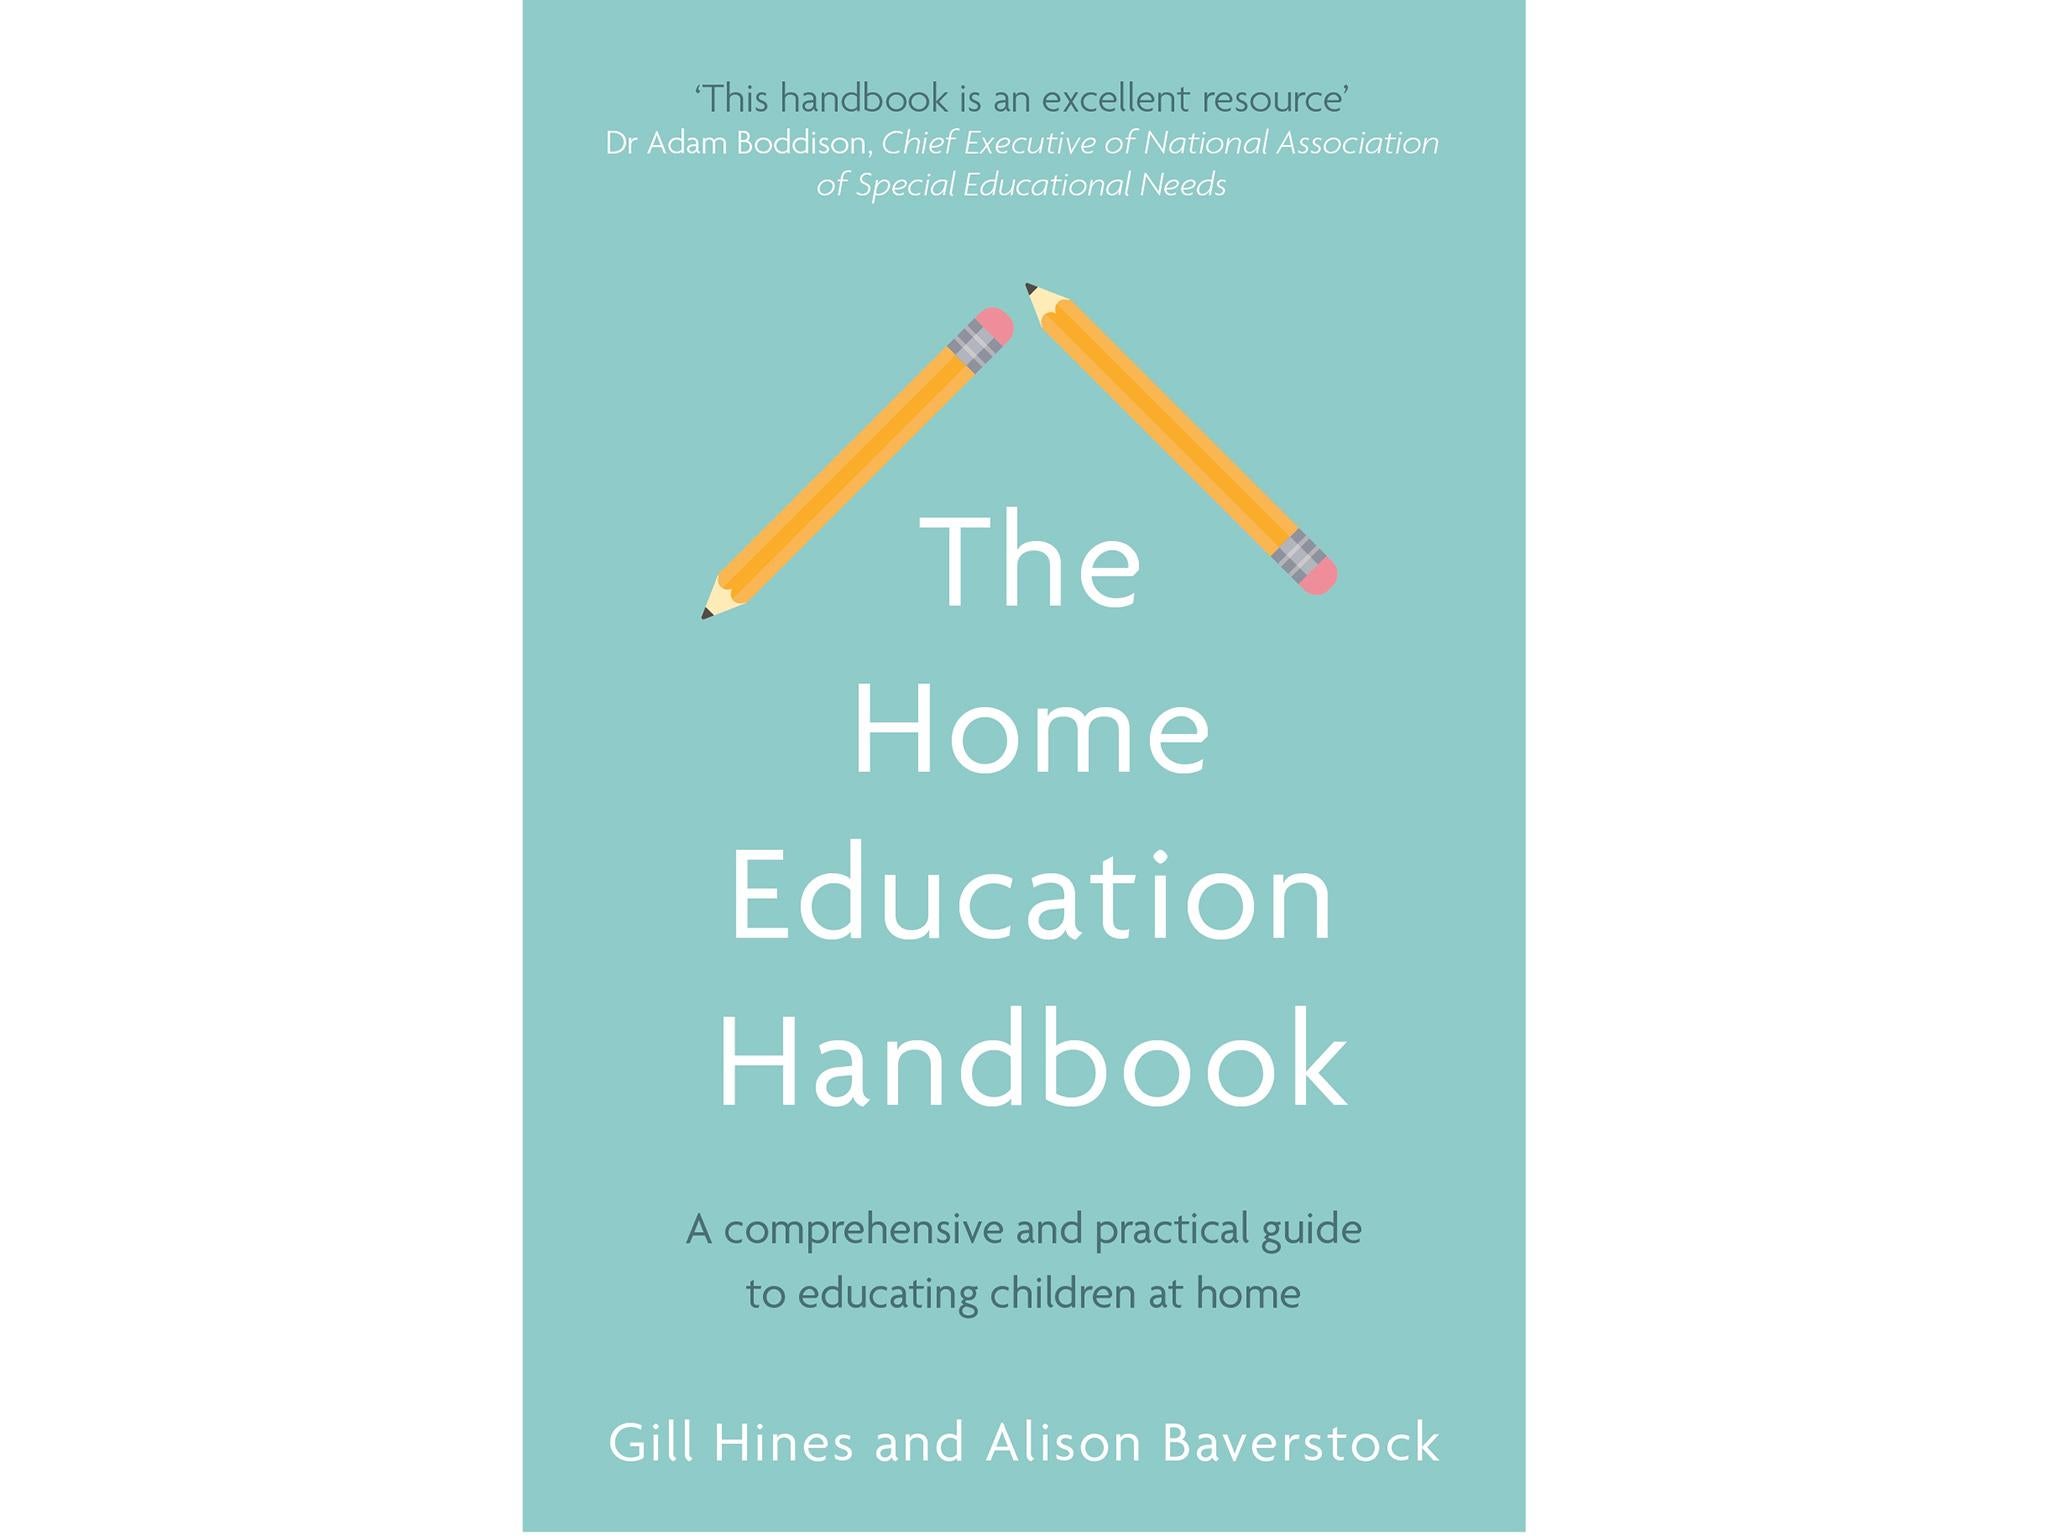 home-education-handbook-homeschooling-indybest.jpg